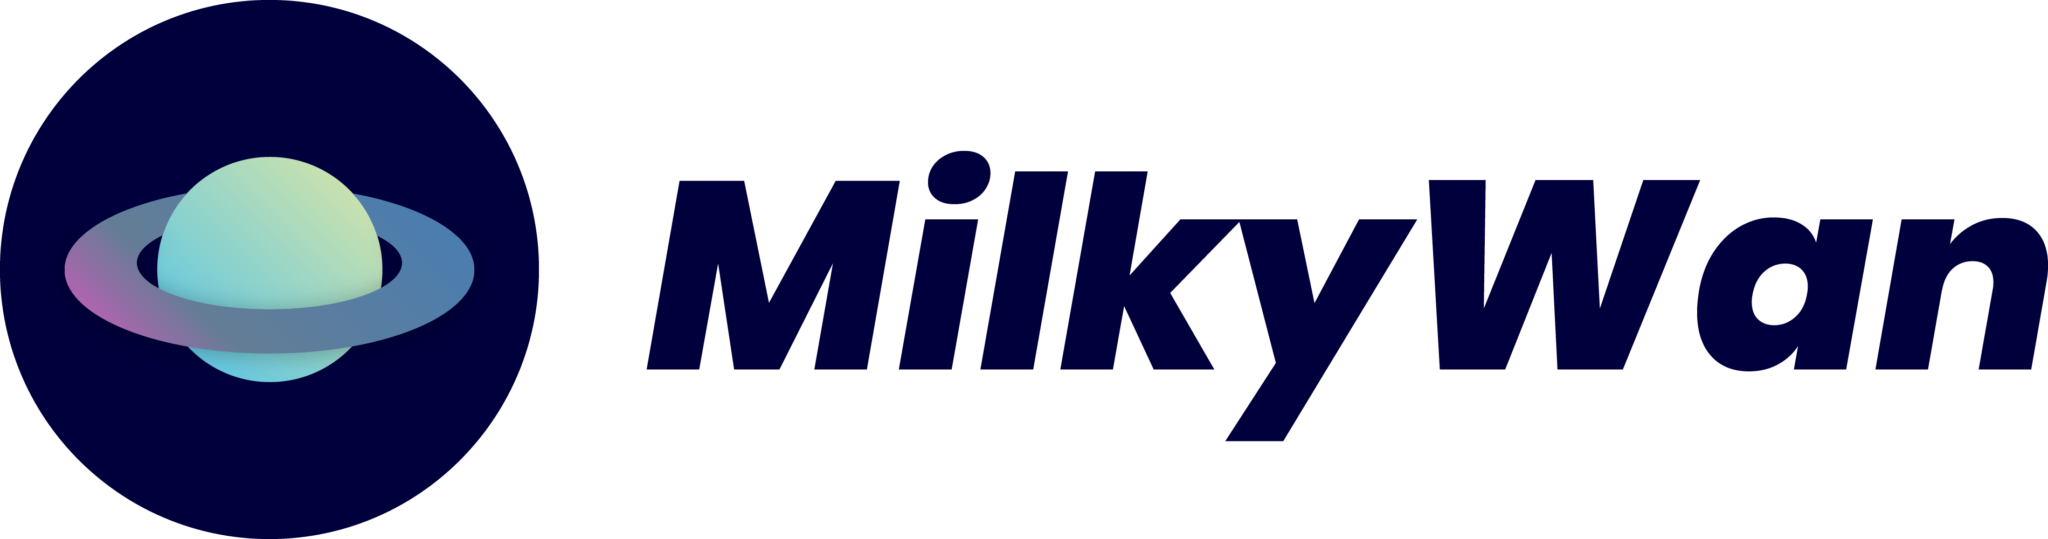 Logo_milkywanrectangle-2048x539.png